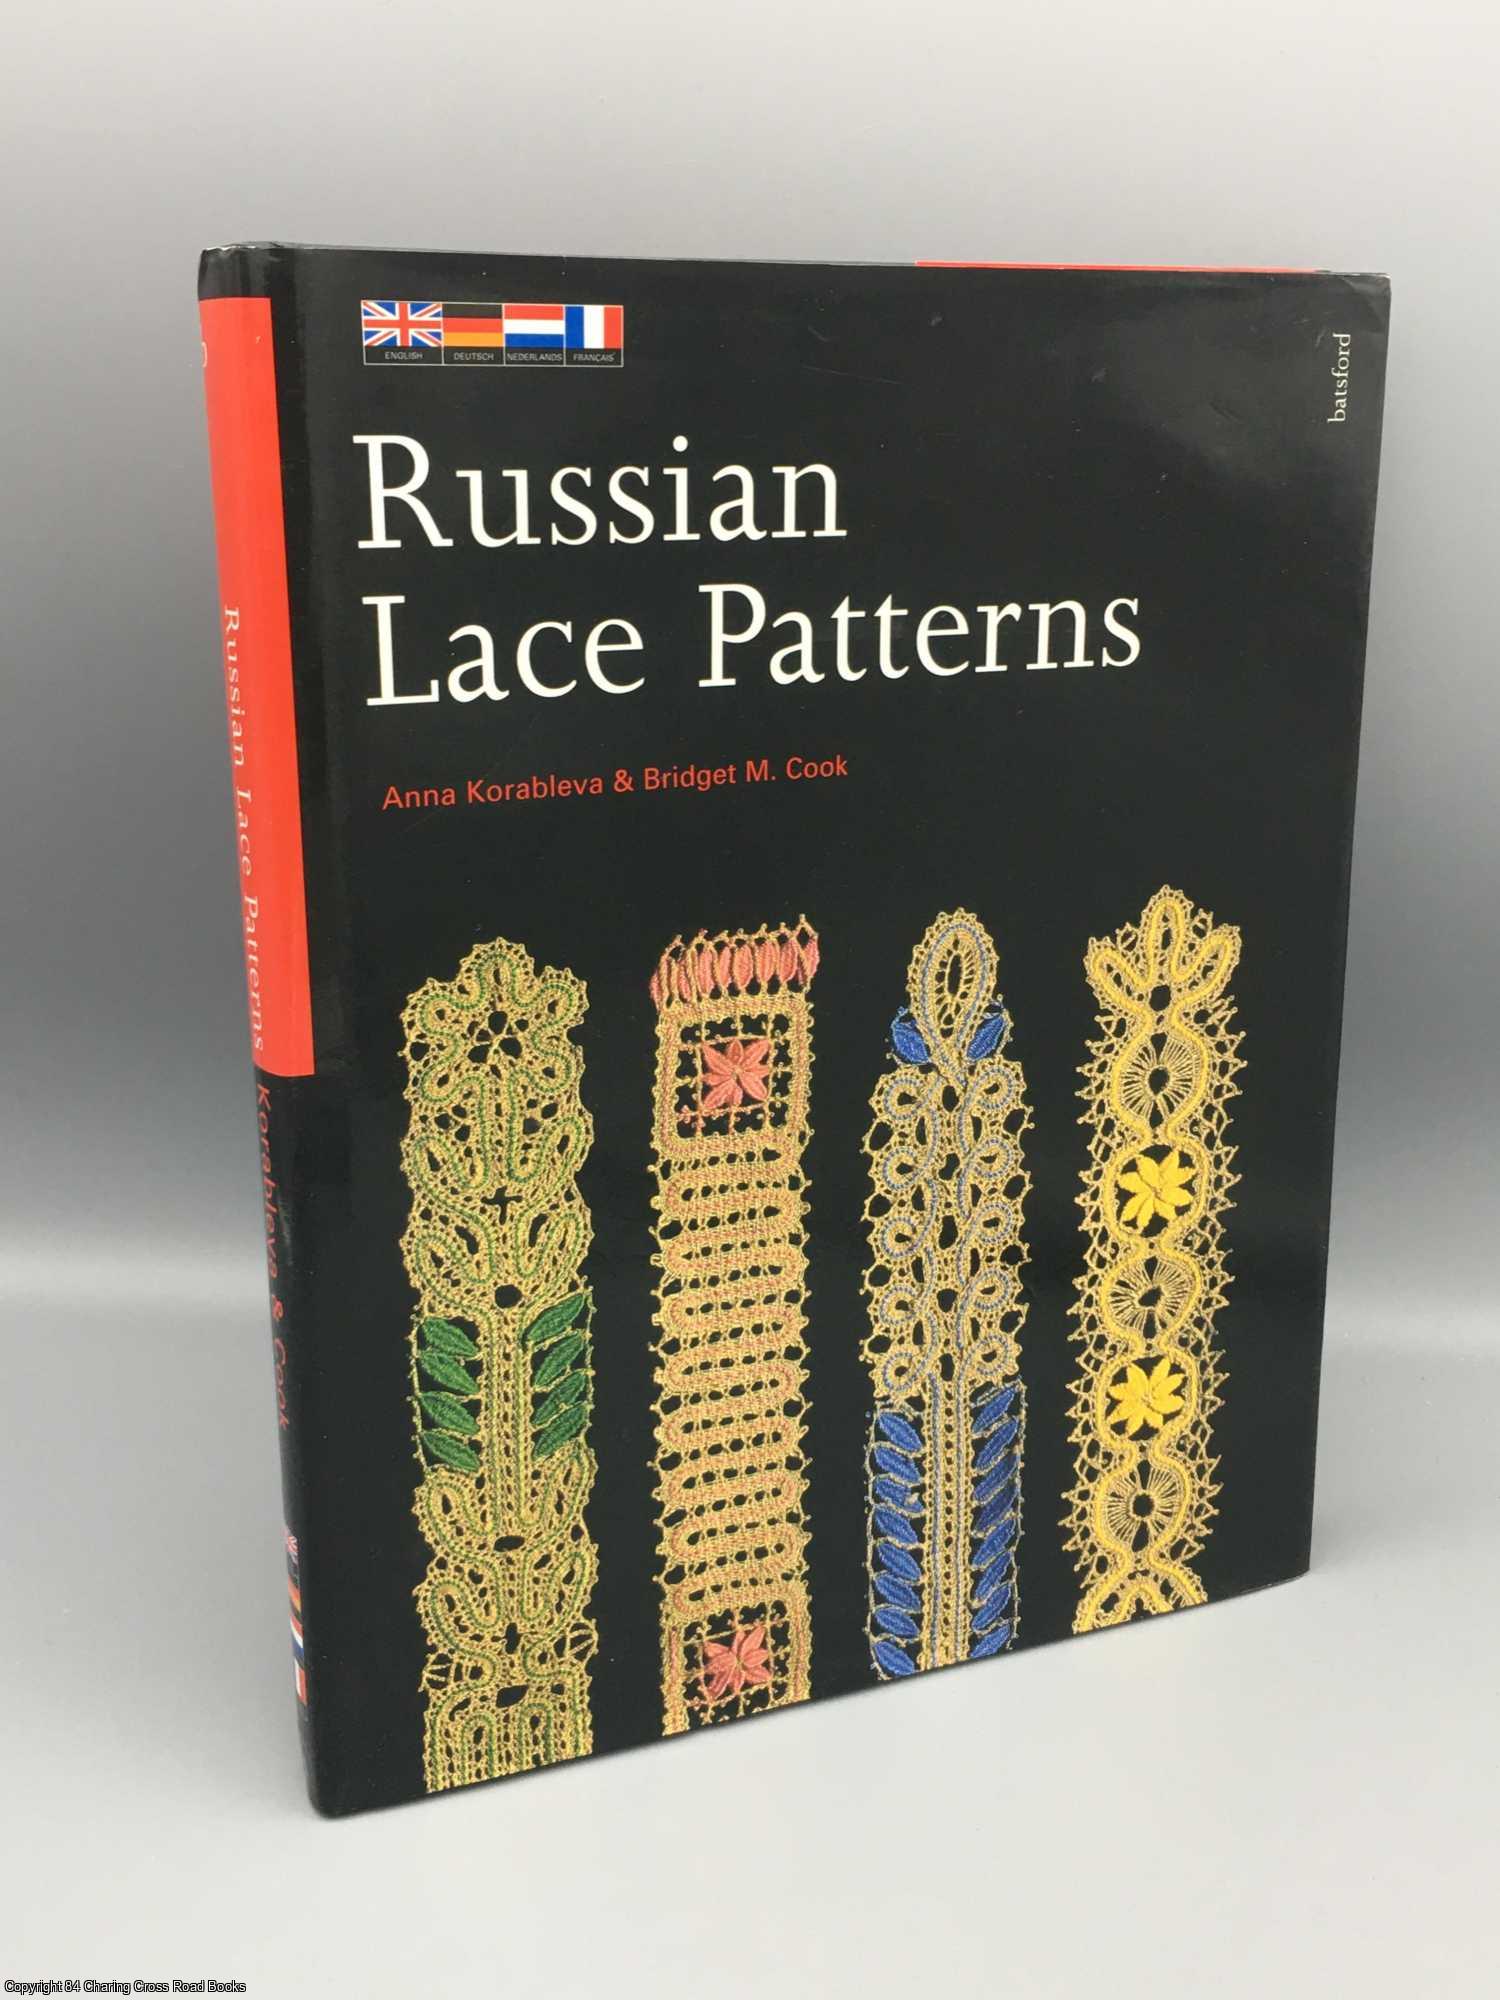 Cook, Bridget M.; Korableva, Anna - Russian Lace Patterns